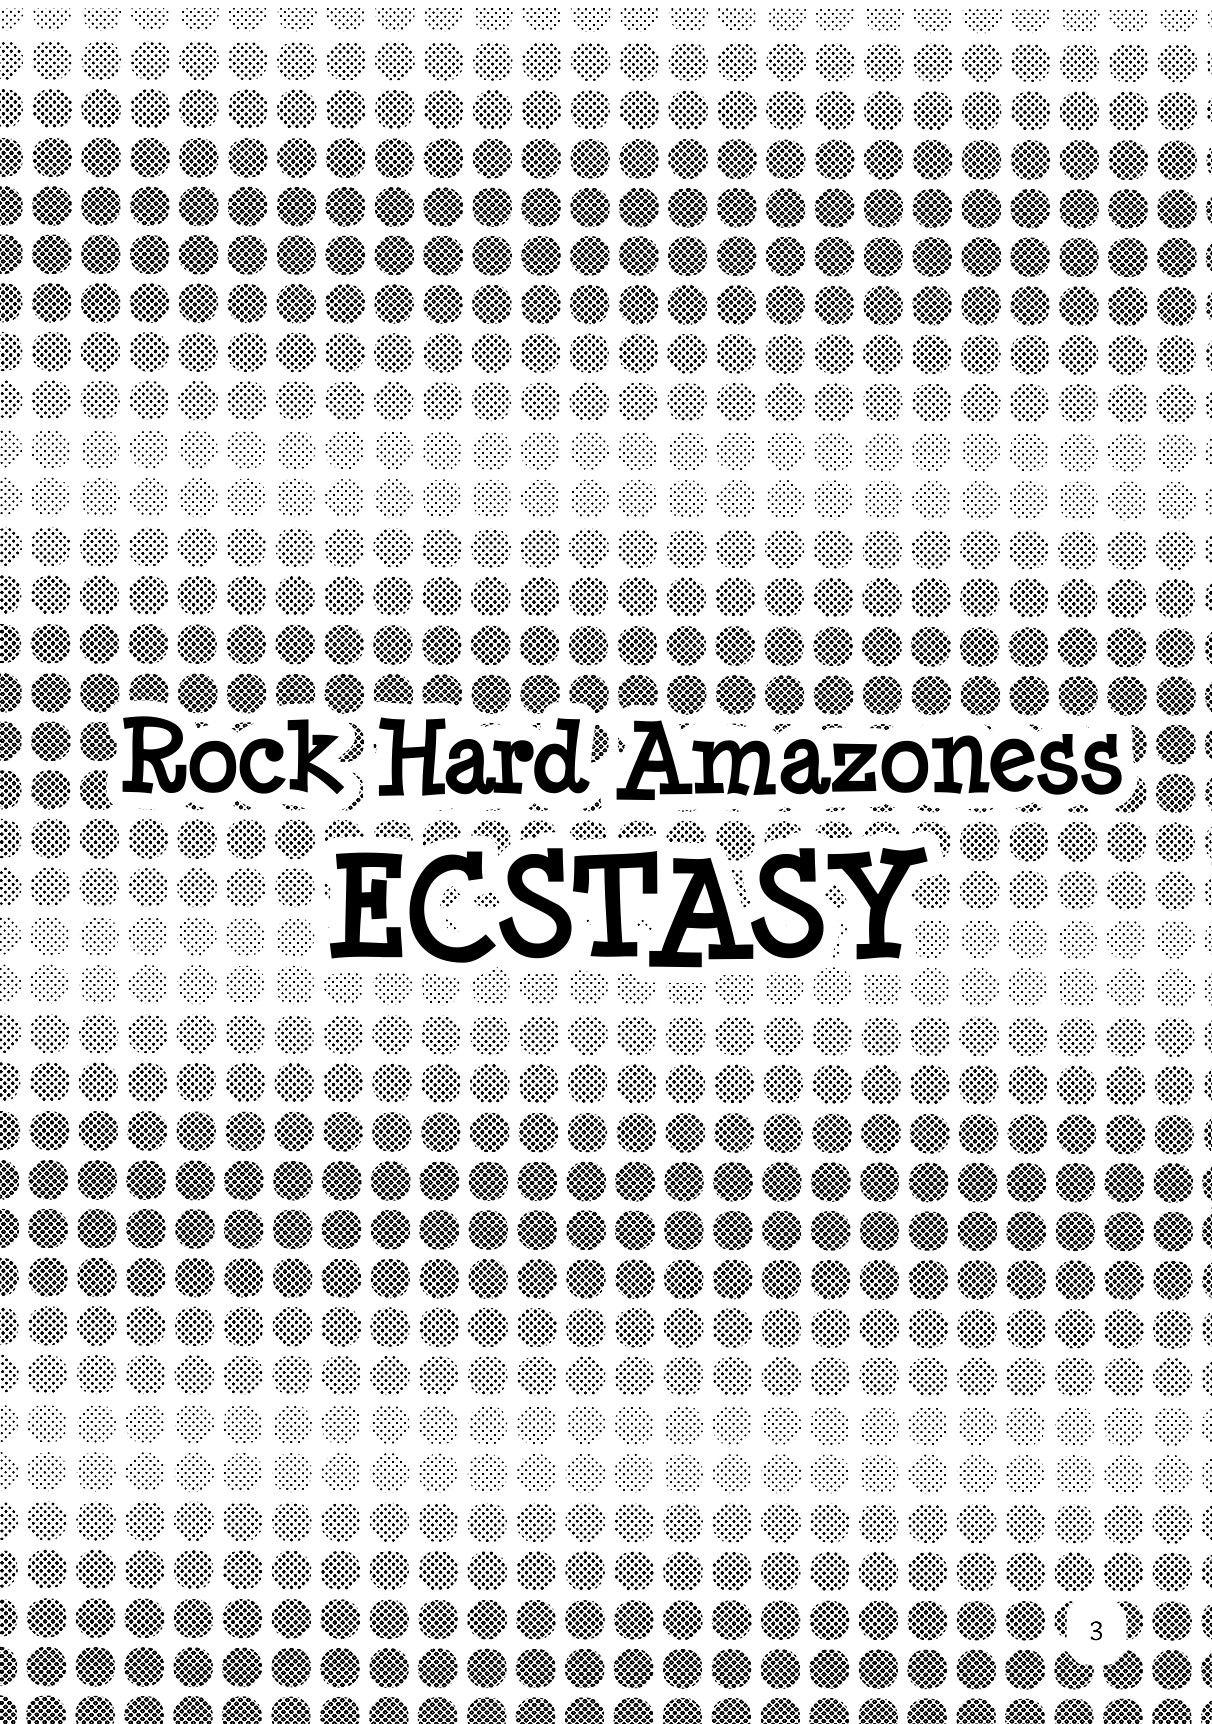 Binbin Amazoness Ecstasy | Rock Hard Amazoness Ecstasy 1